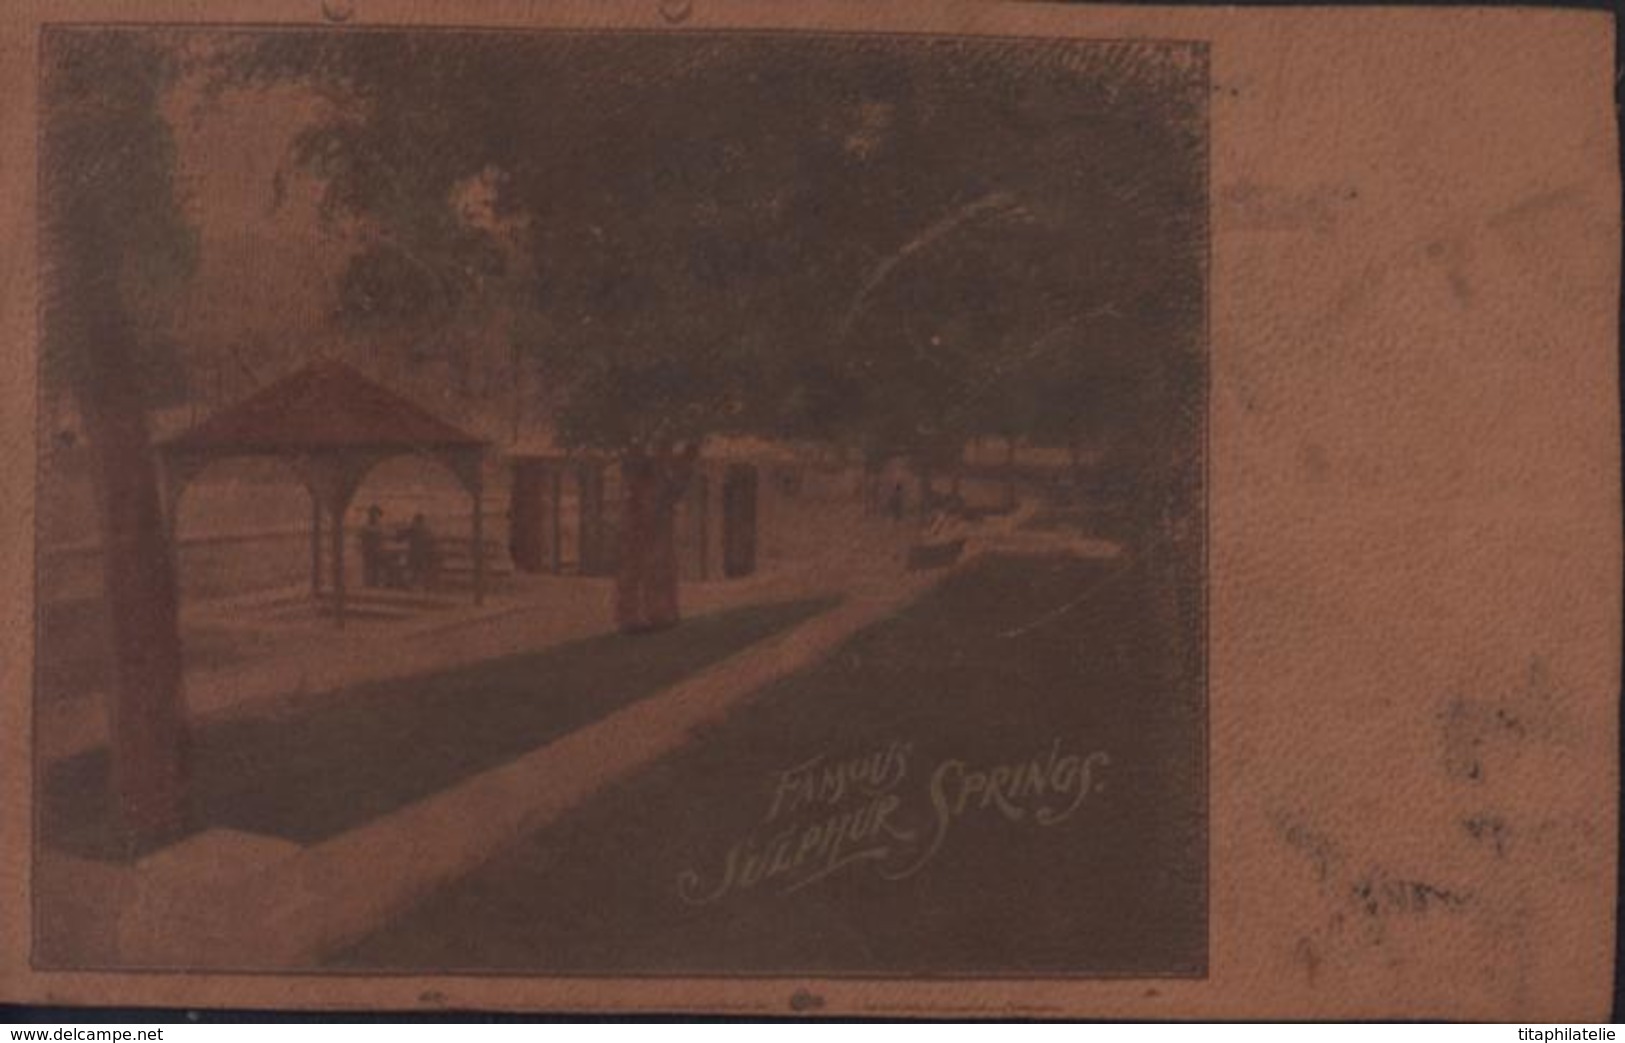 Carte Postale CPA En Cuir Post Card Famous Sulphur Springs Texas CAD 1906 Joplin Sept 12 2 AM 1906 MO Mail Art - Other & Unclassified